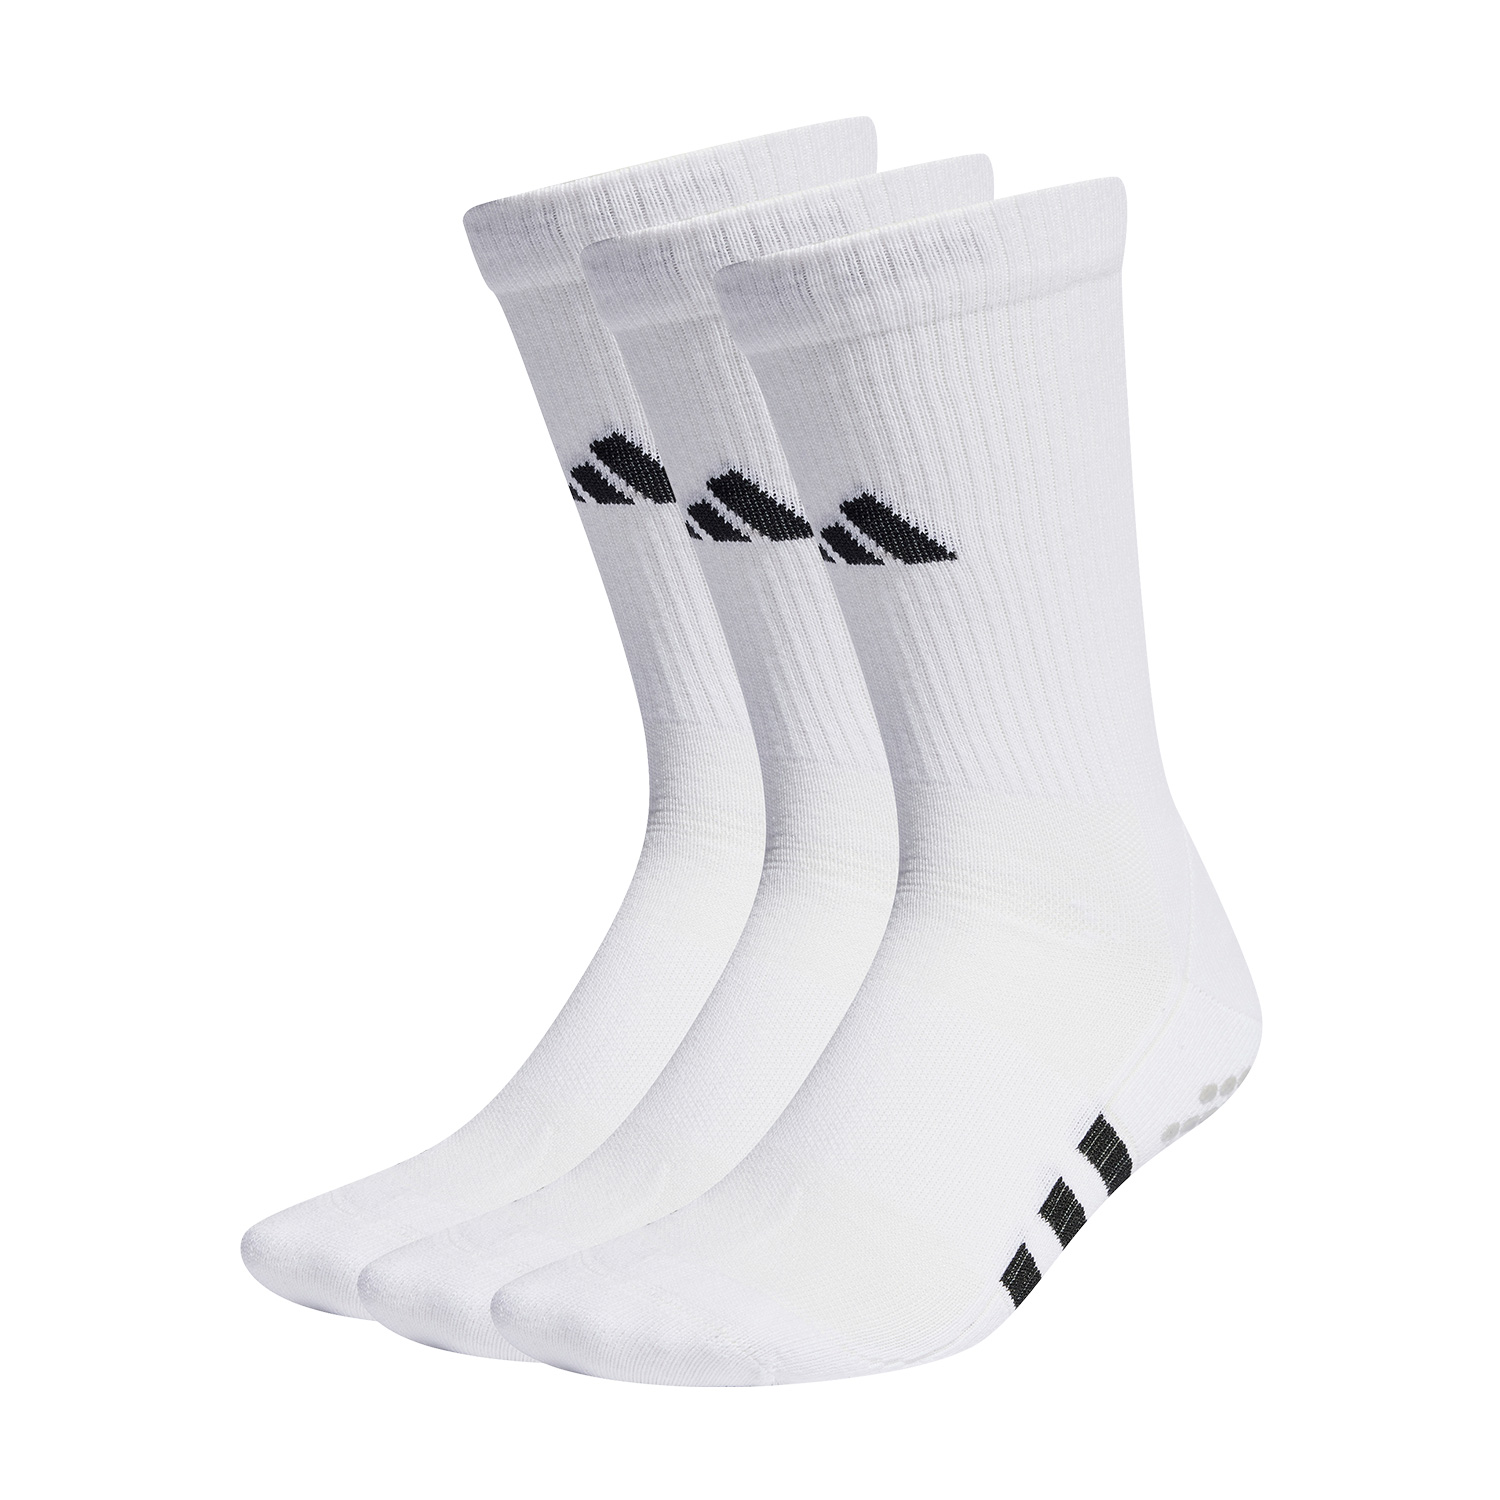 Performance AEROREADY x 3 Socks - White/Black